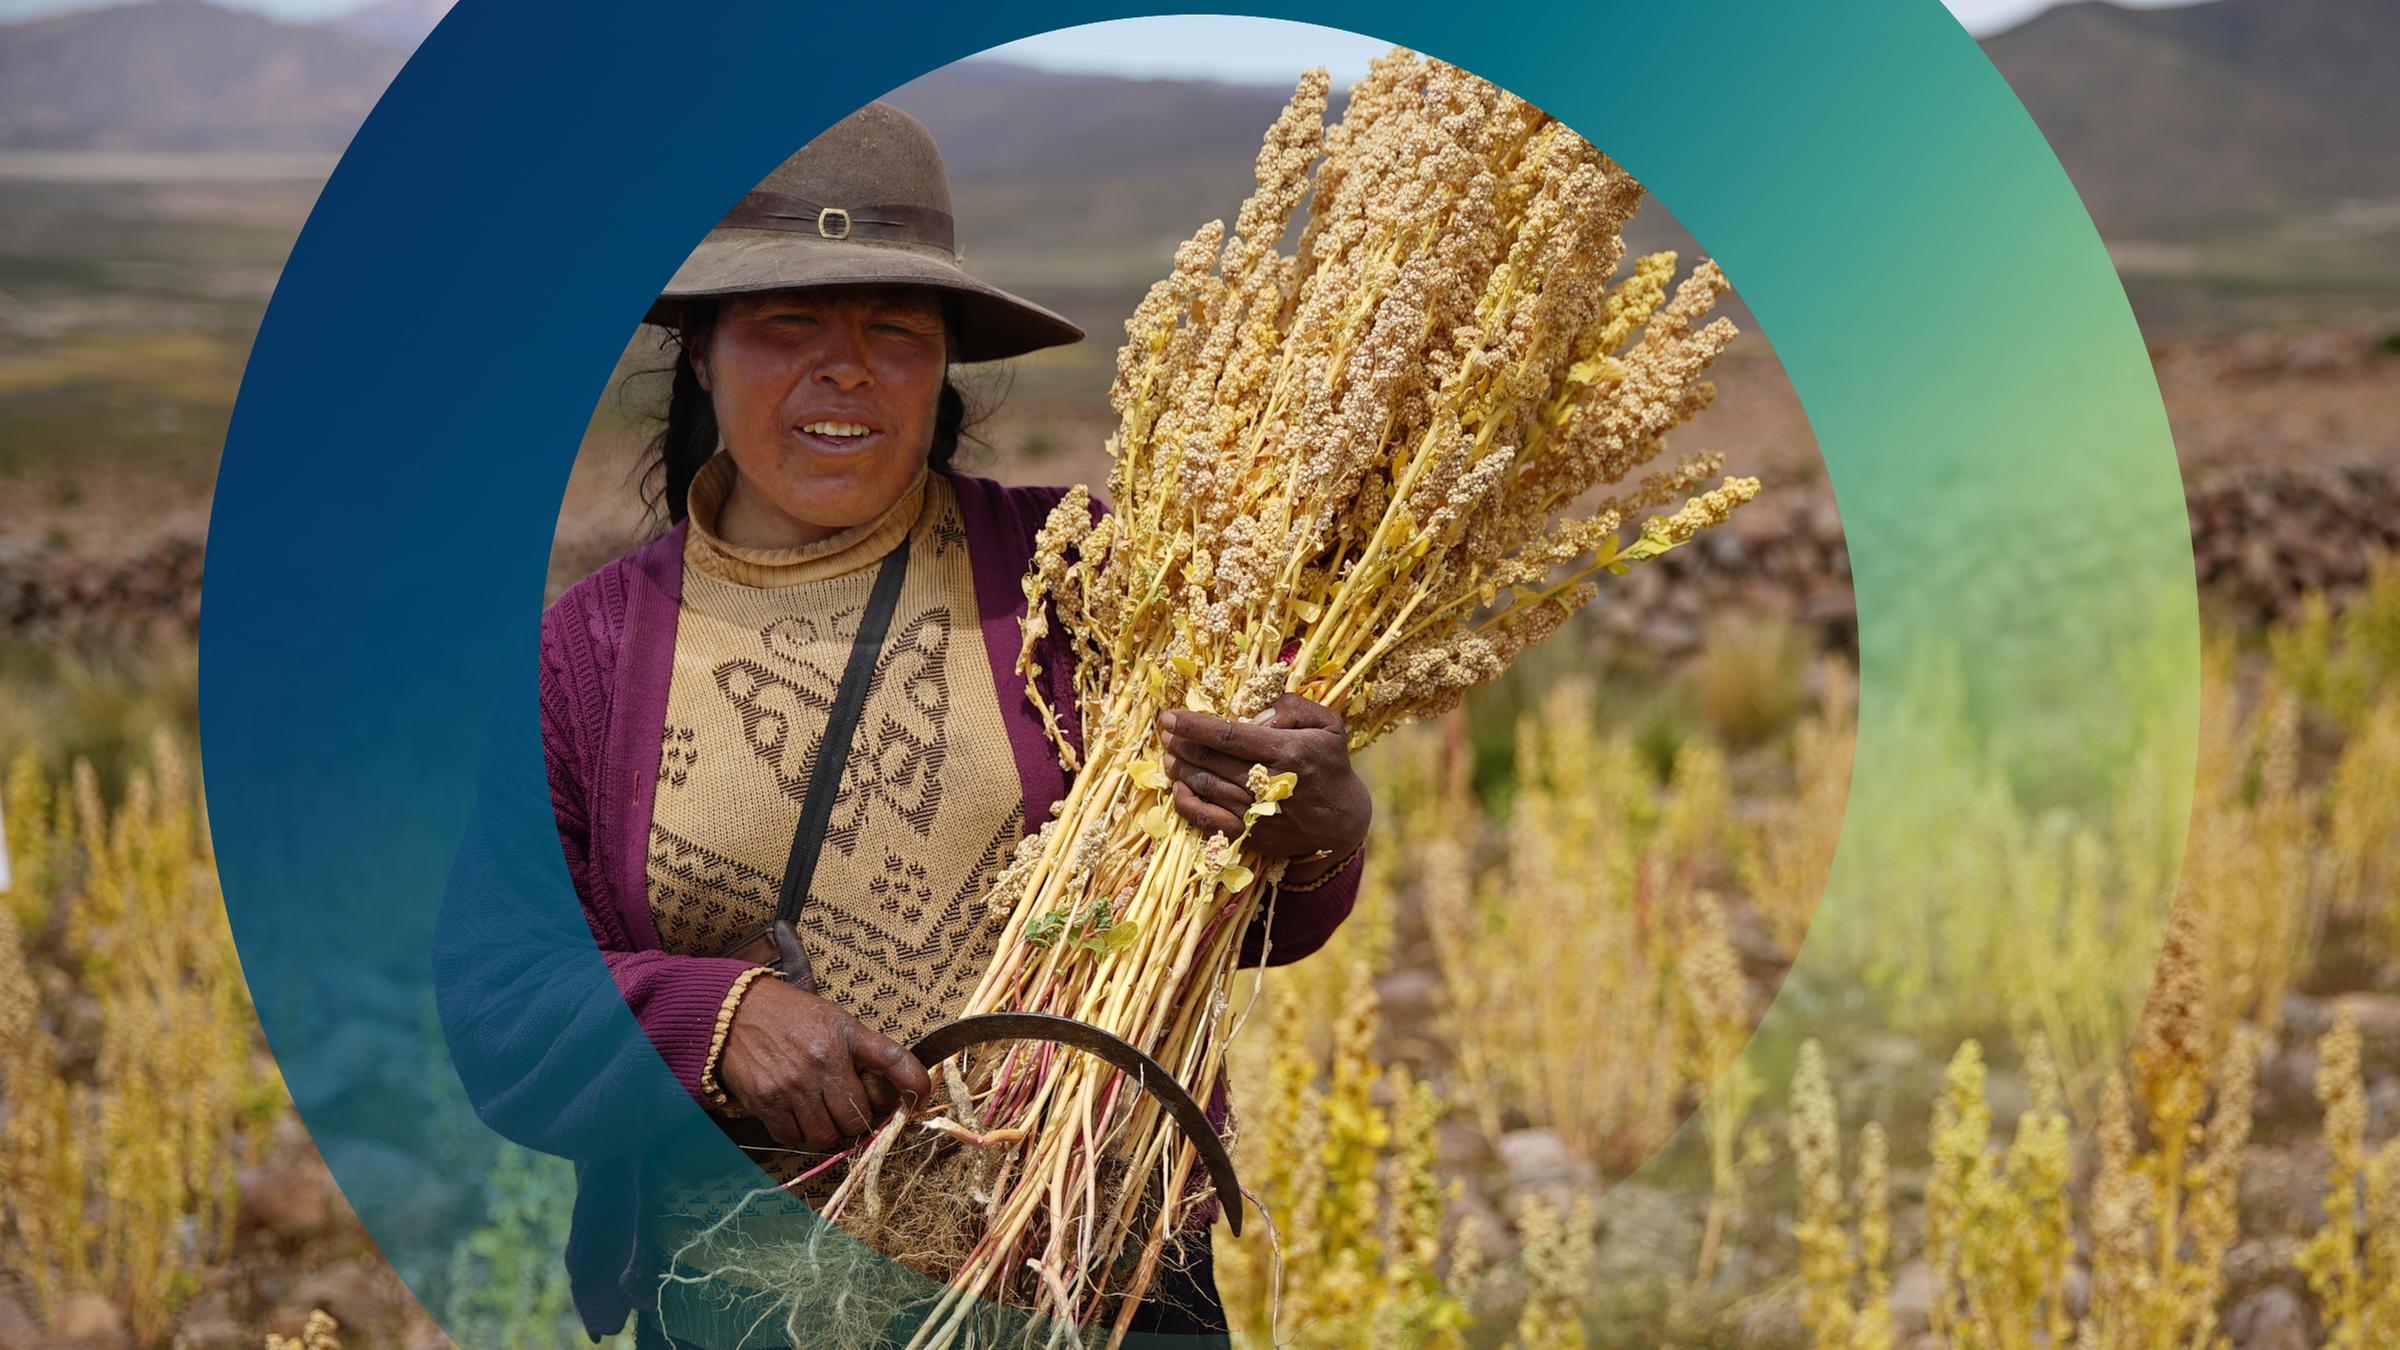 Quinoa-Ernte in Bolivien